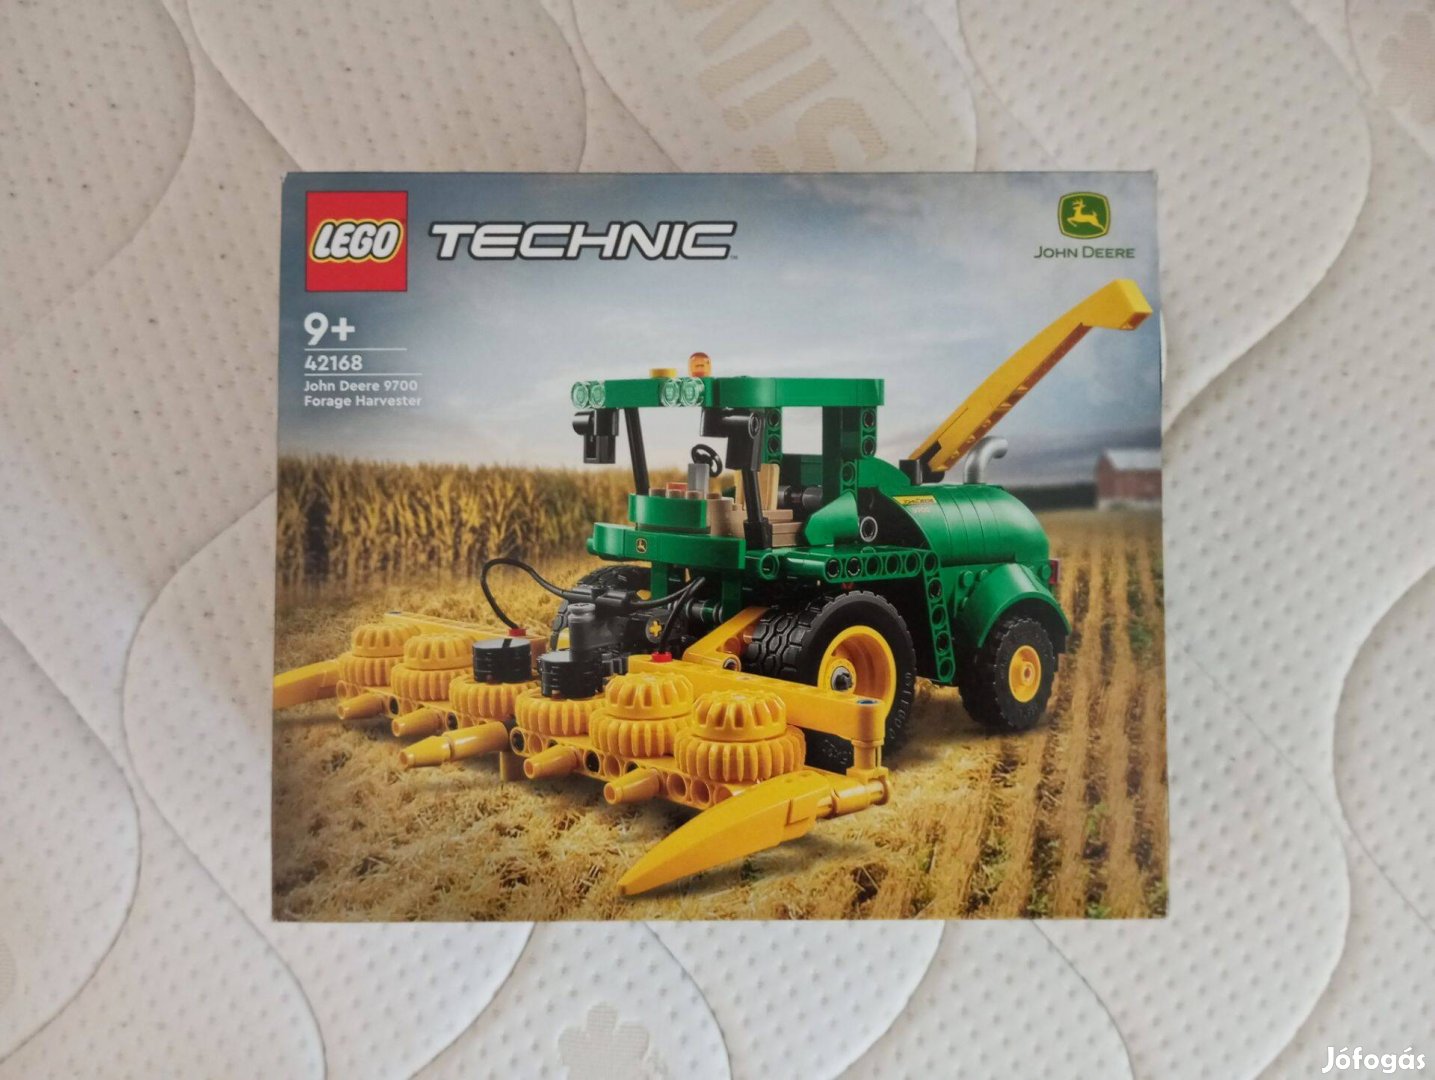 42168 Lego John Deere 9700 Forage Harvester